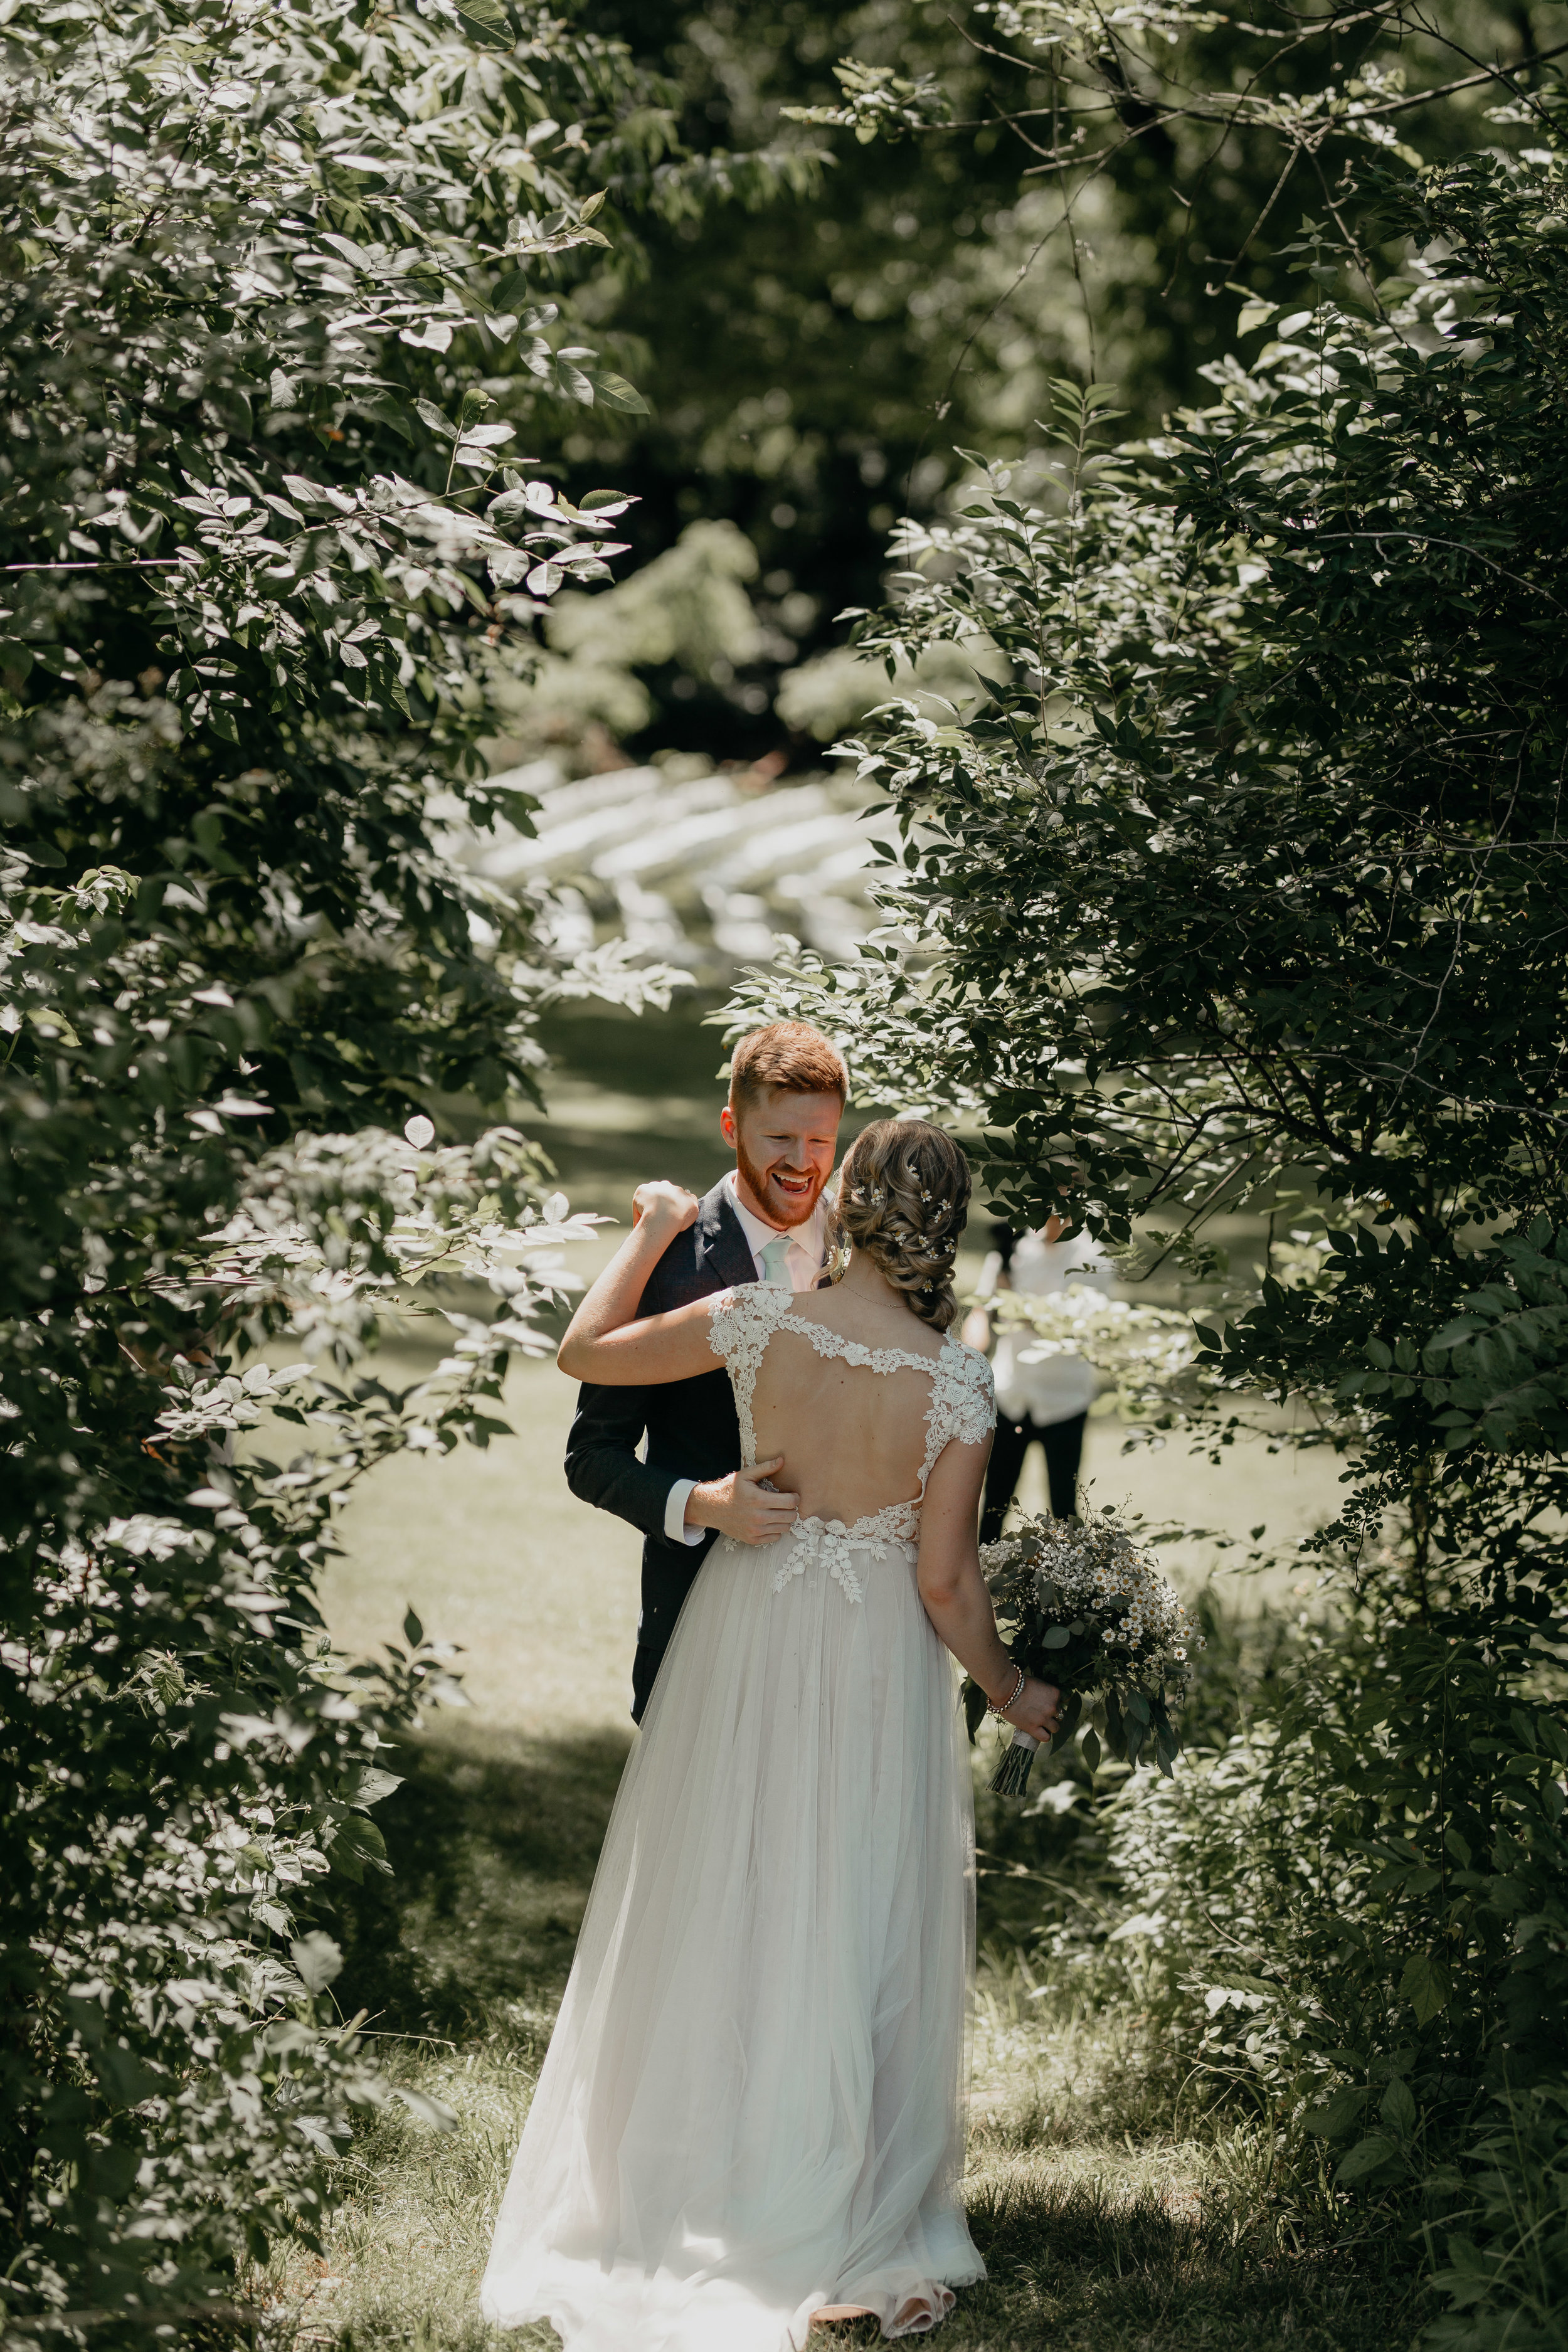 Nicole-Daacke-Photography-pennsylvania-laid-back-outside-backyard-wedding-family-summer-june-maryland-barefoot-bride-woodland-trees-sunset-couple-15.jpg